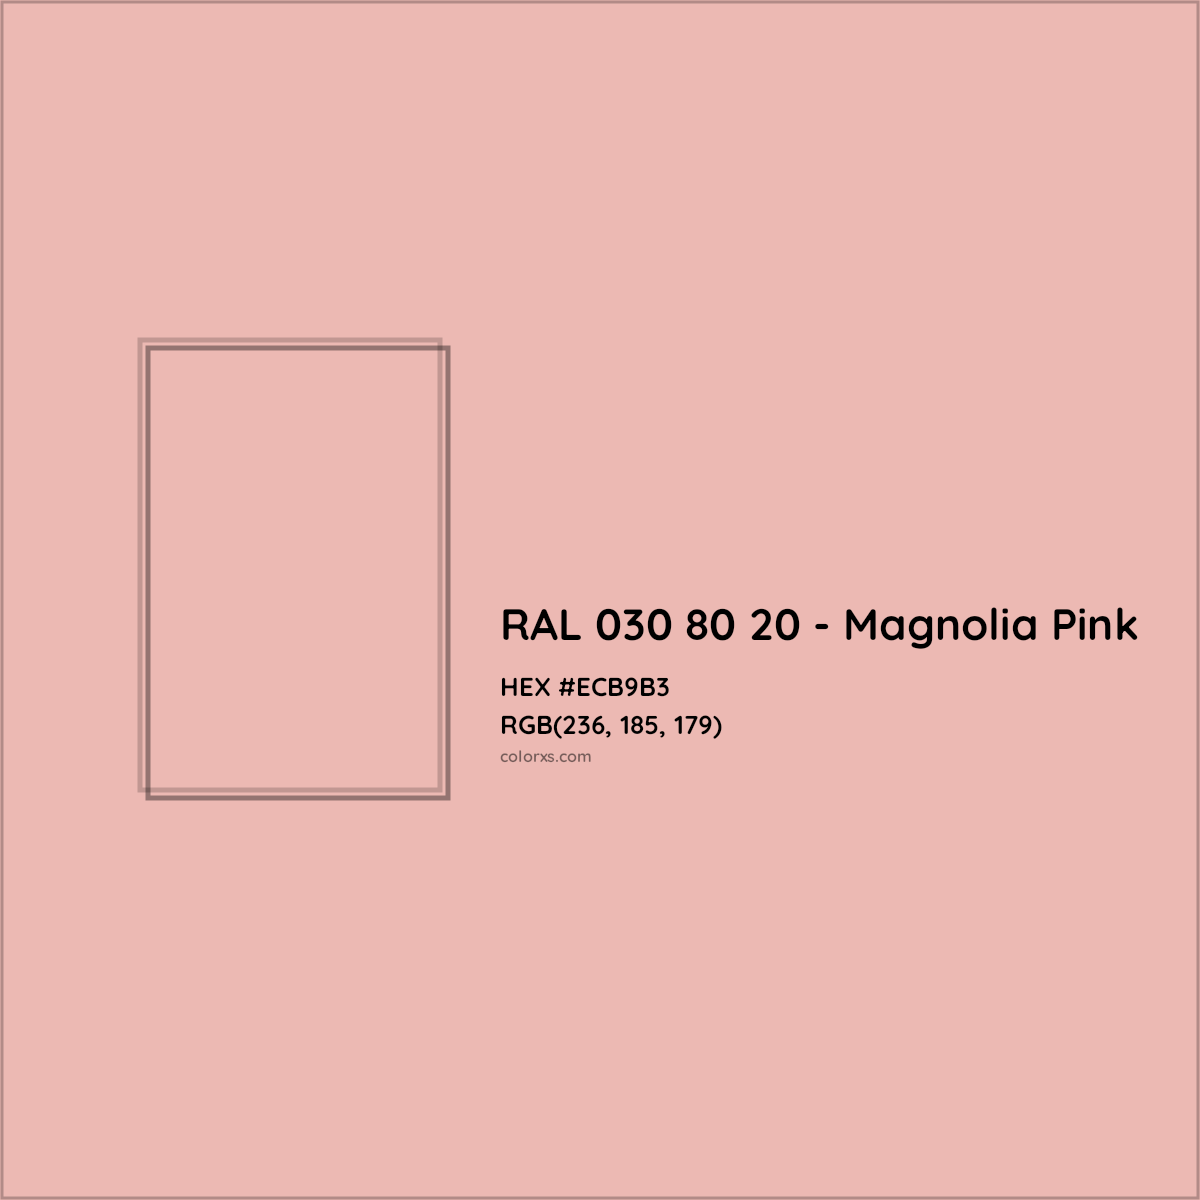 HEX #ECB9B3 RAL 030 80 20 - Magnolia Pink CMS RAL Design - Color Code